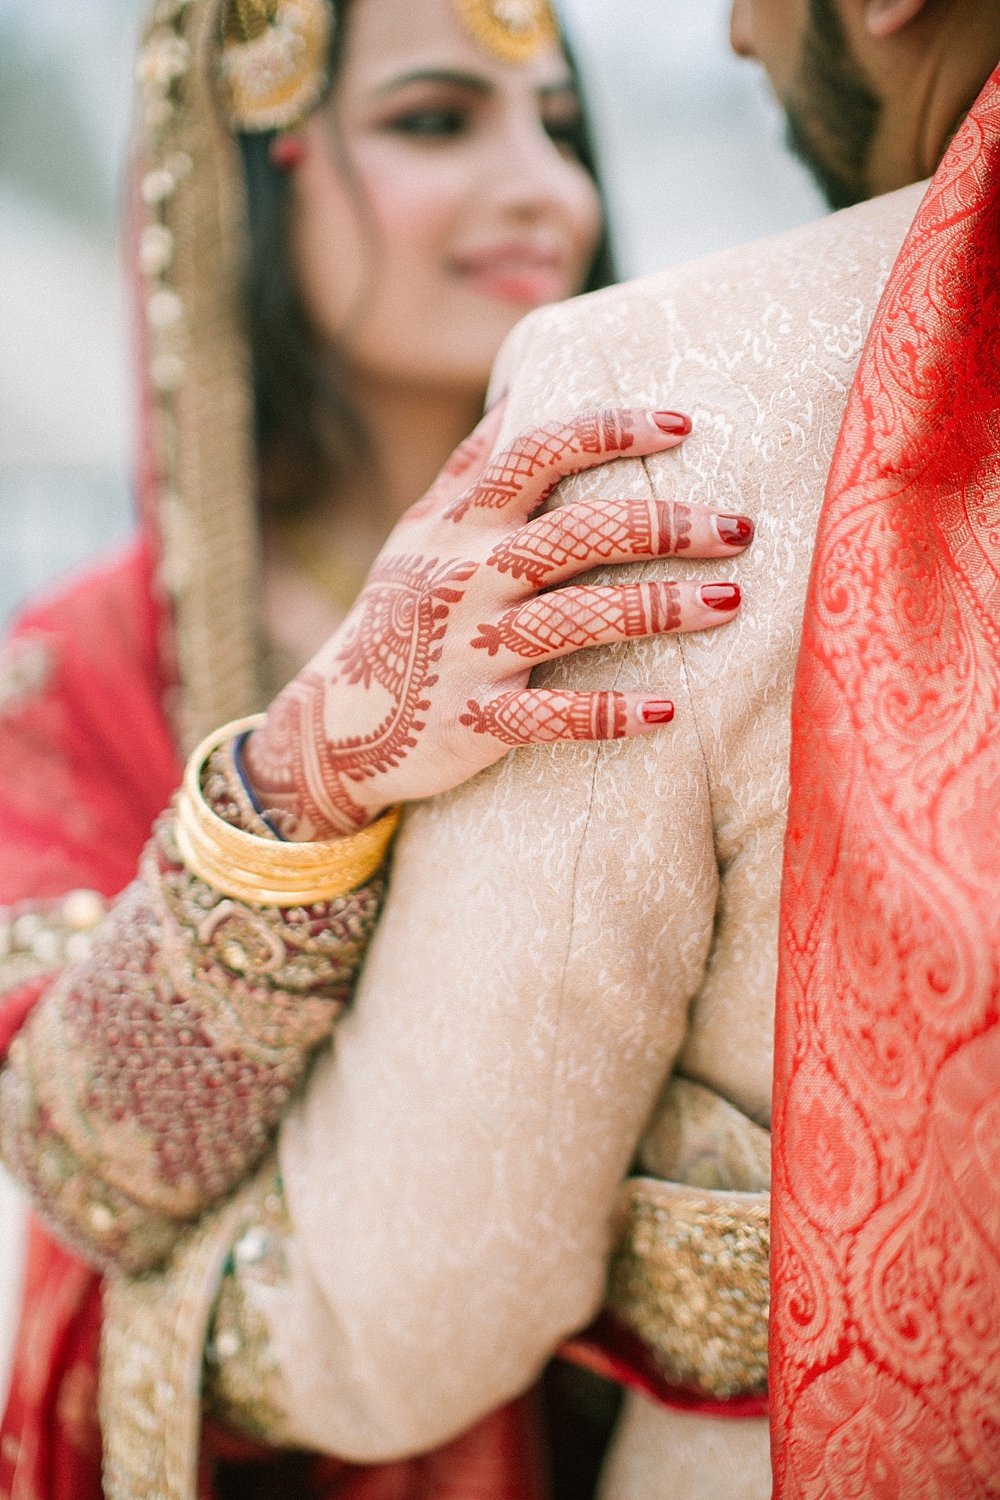  Indian Wedding Hilton Bonnet Creek Waldorf Astoria Orlando FL - Mamiya 645 afd - Film Photography | Ashley Holstein Photography #bride #henna